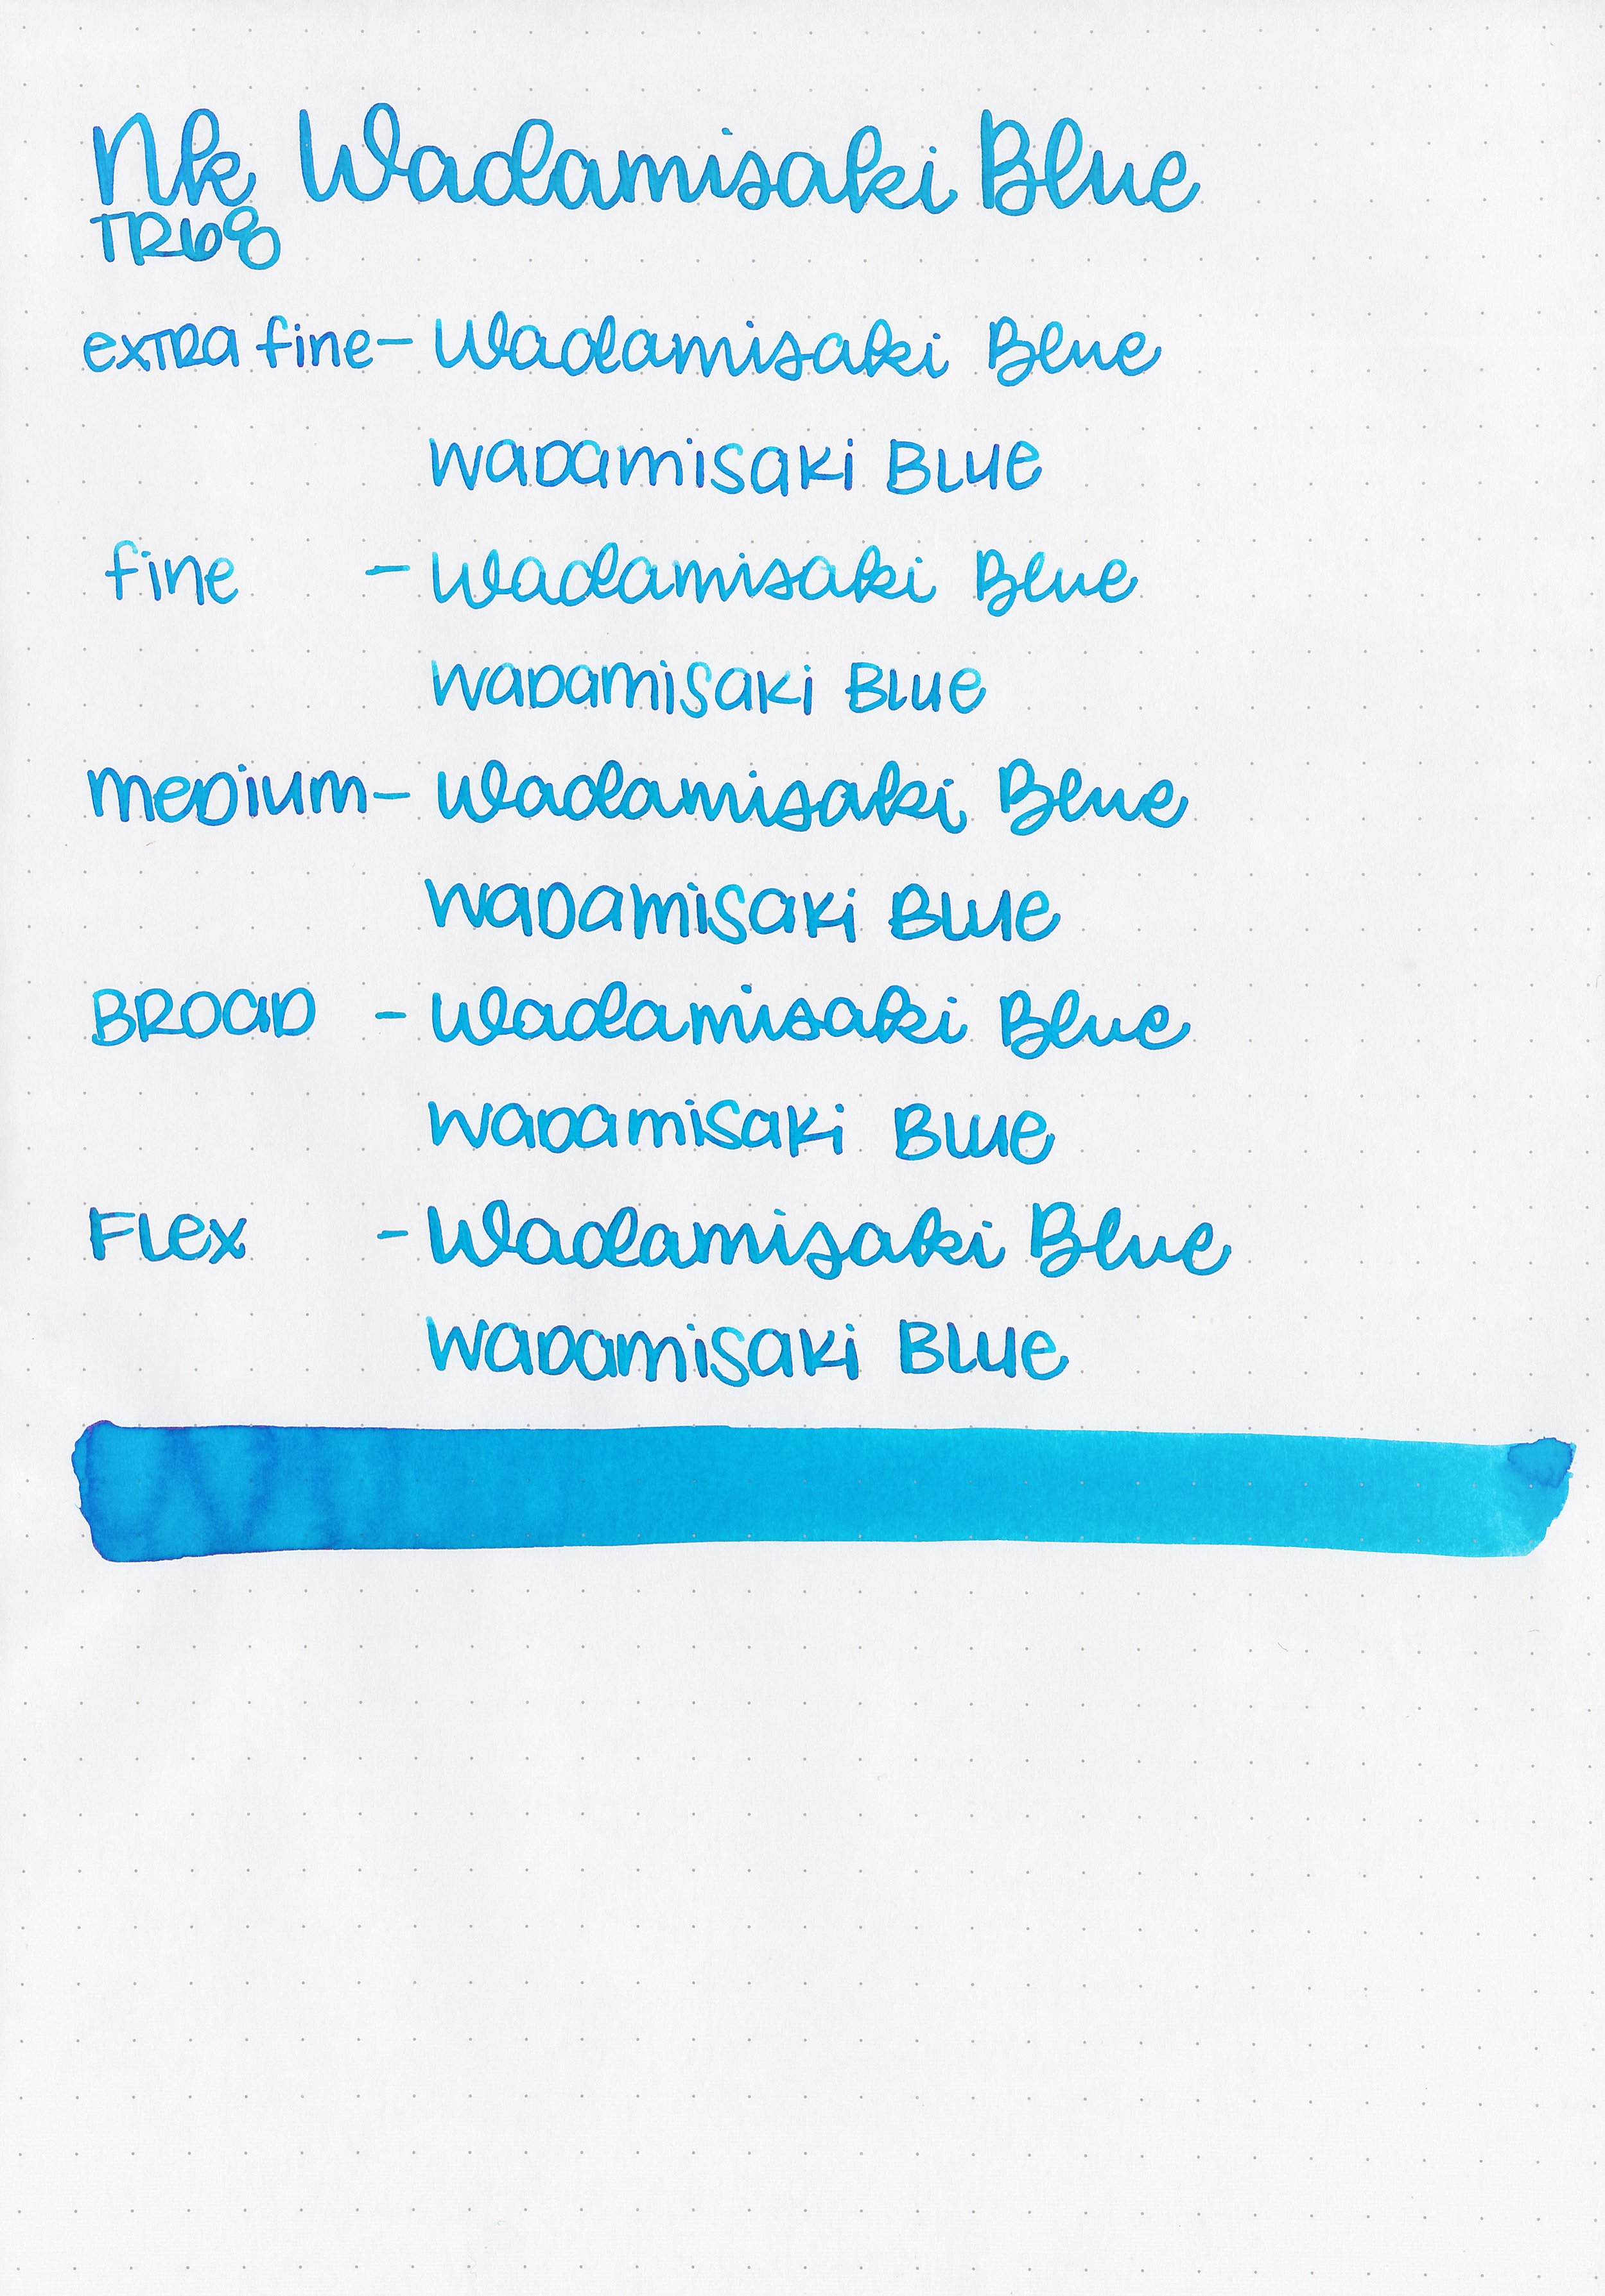 nk-wadamisaki-blue-6.jpg